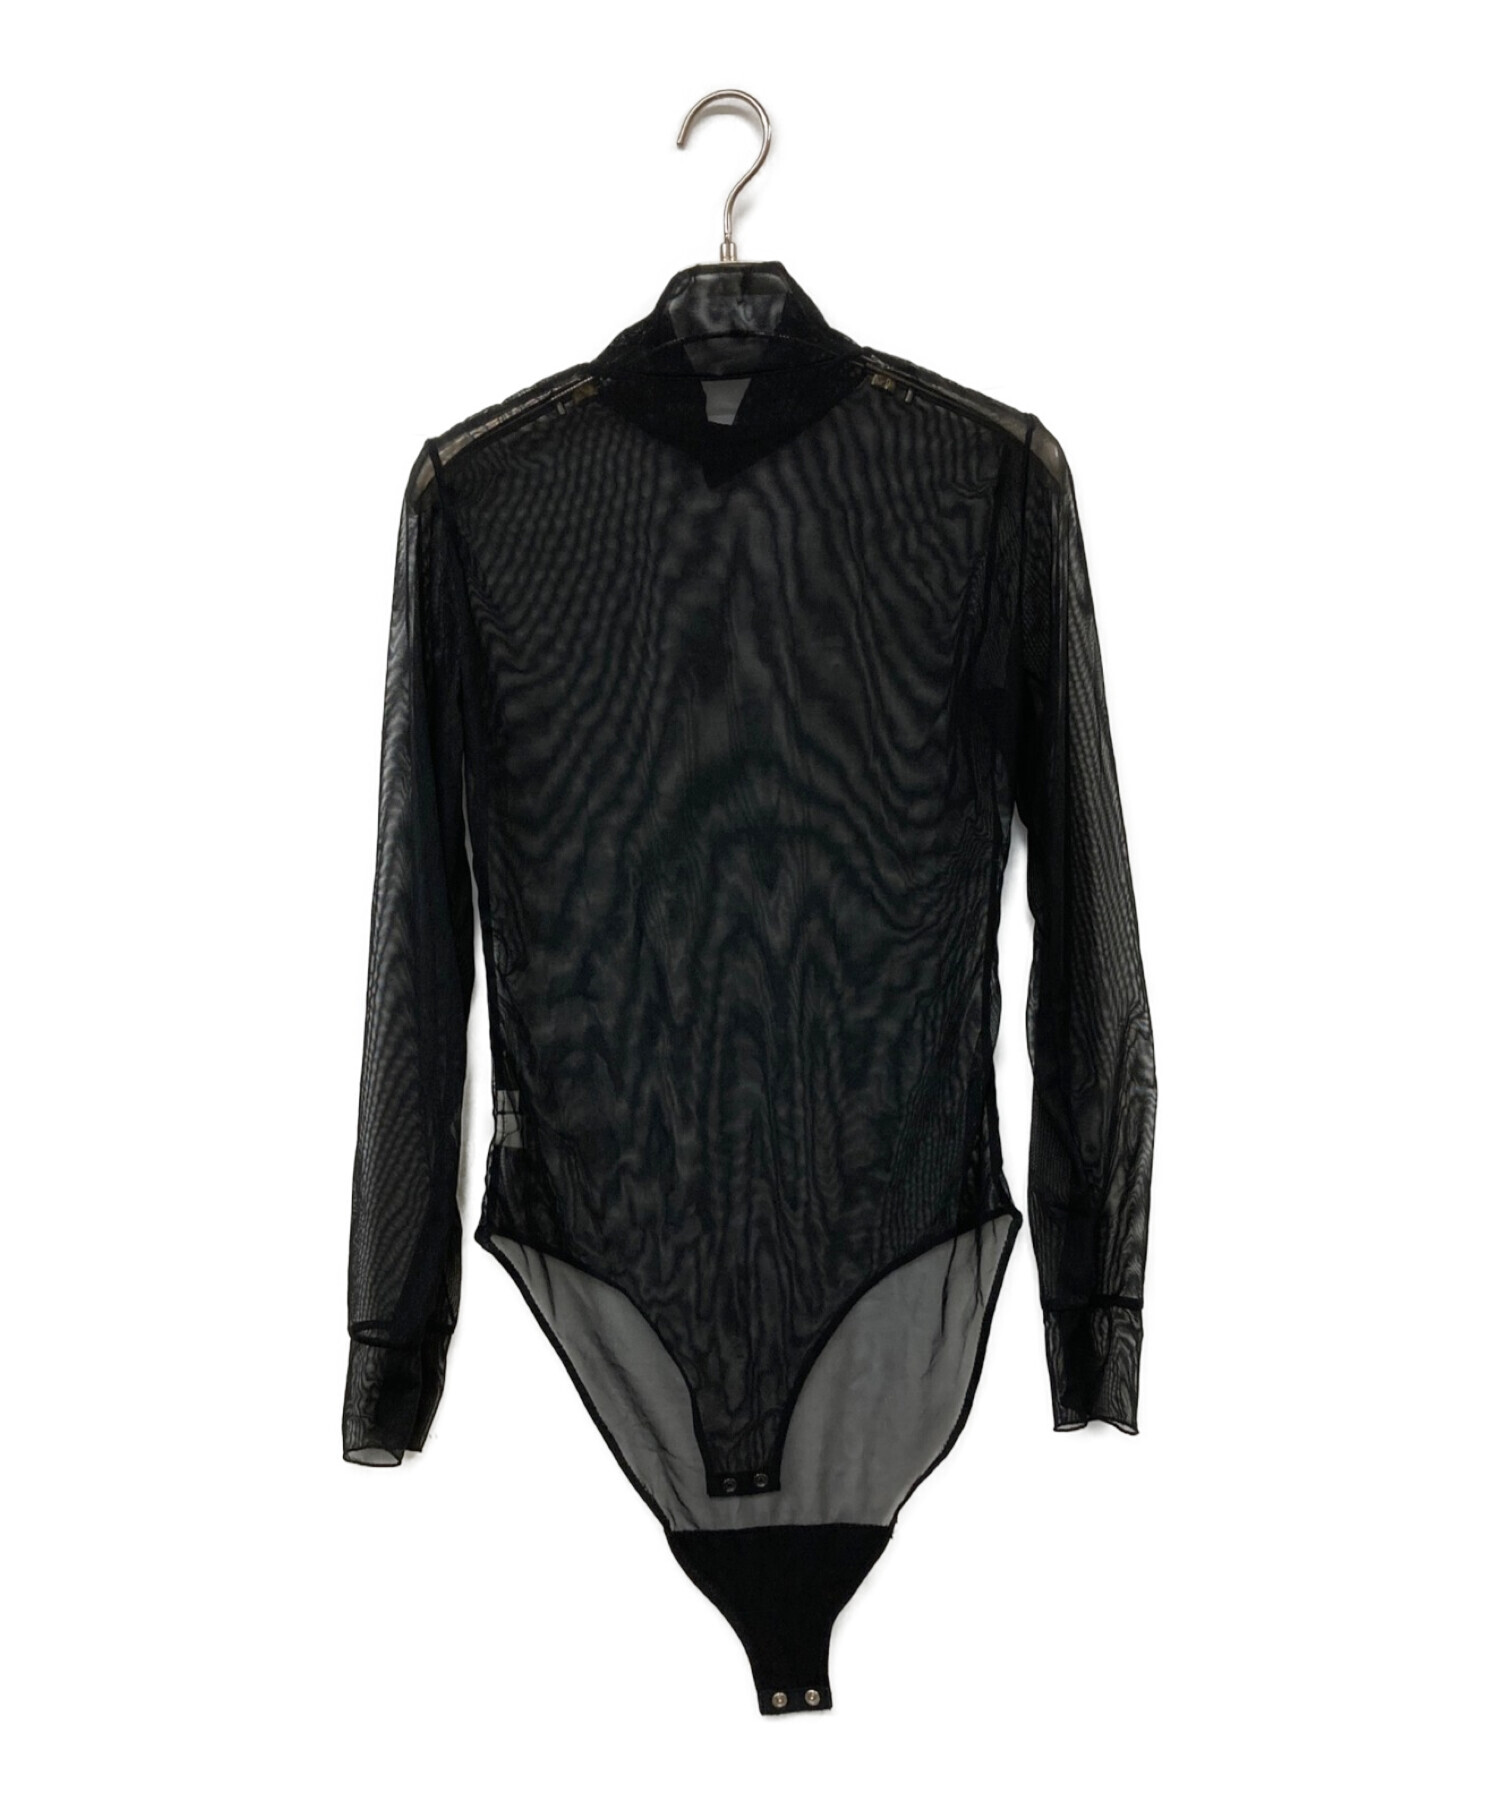 BIOTOP yo Lingerie (ビオトープ) Sheer body suit ブラック サイズ:1